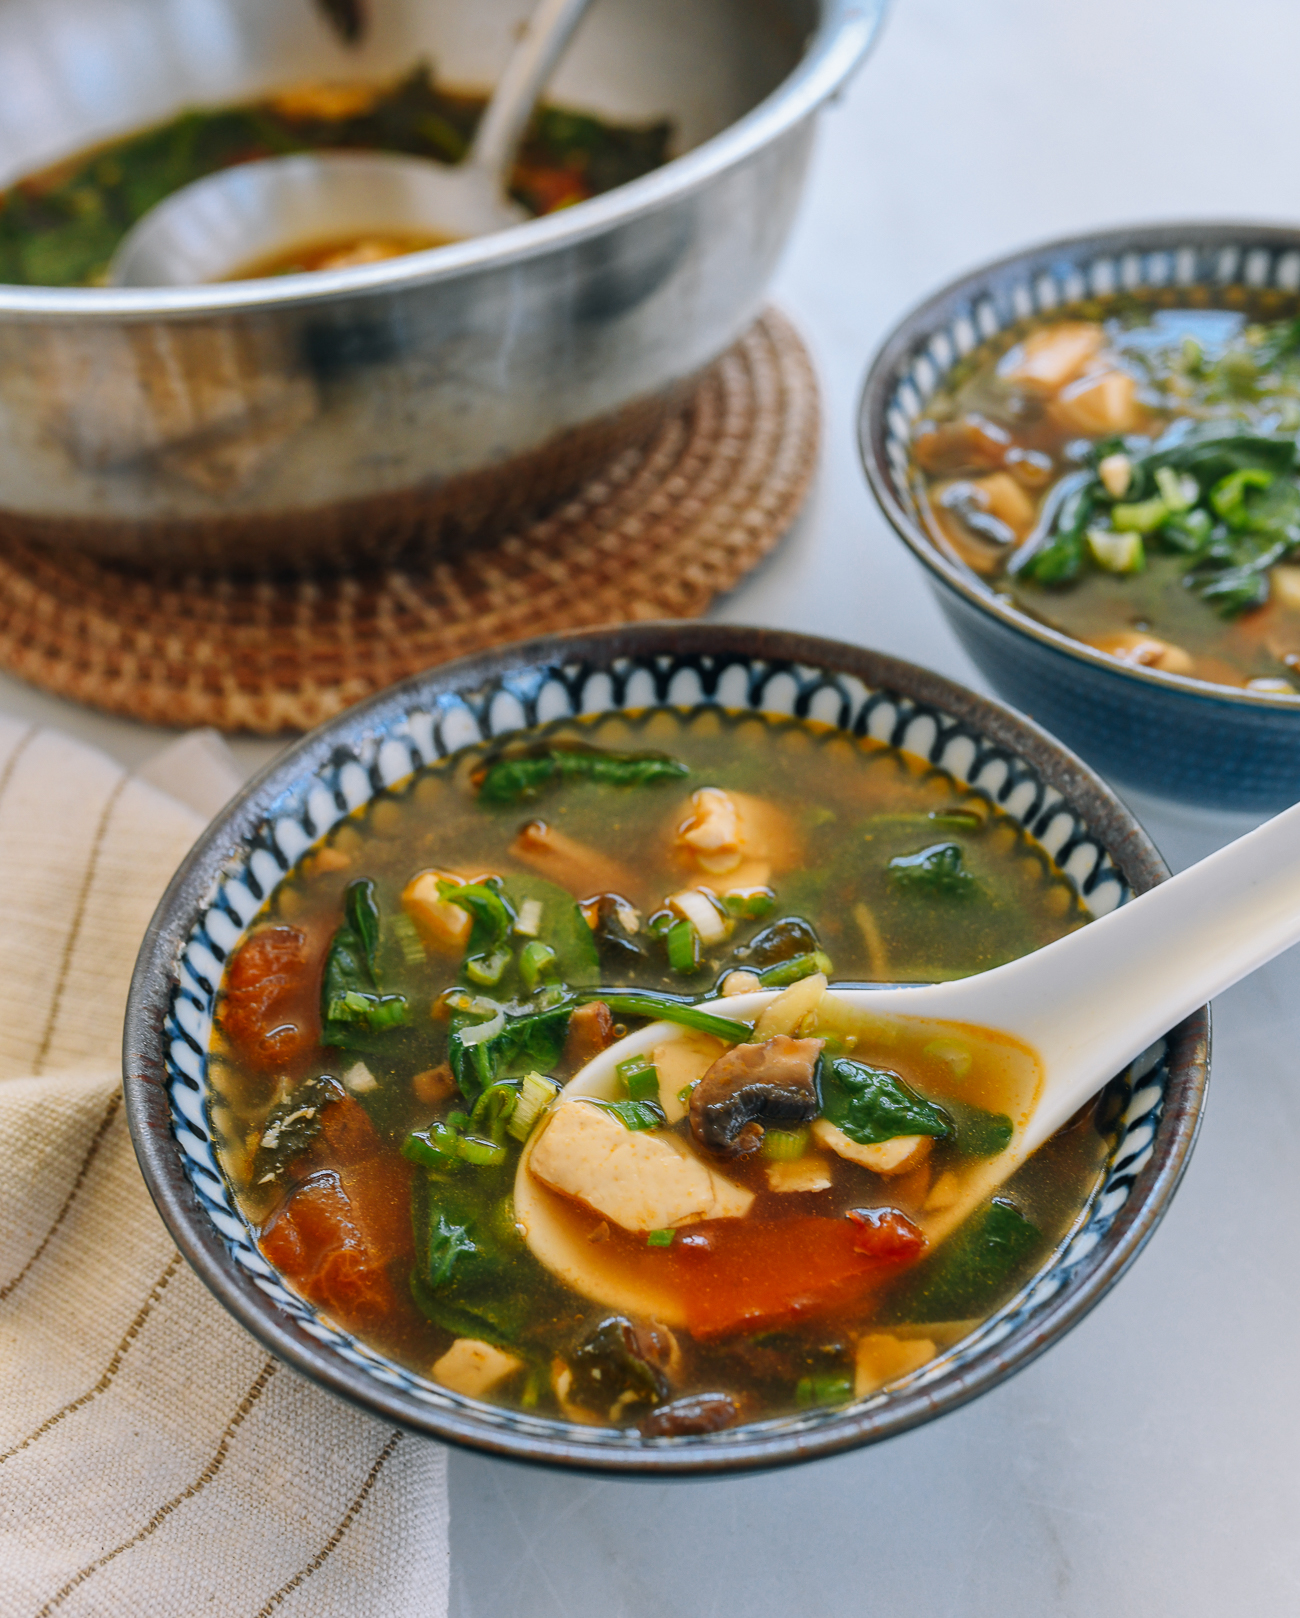 Chinese soup spoon dipped into Vegan Detox Soup